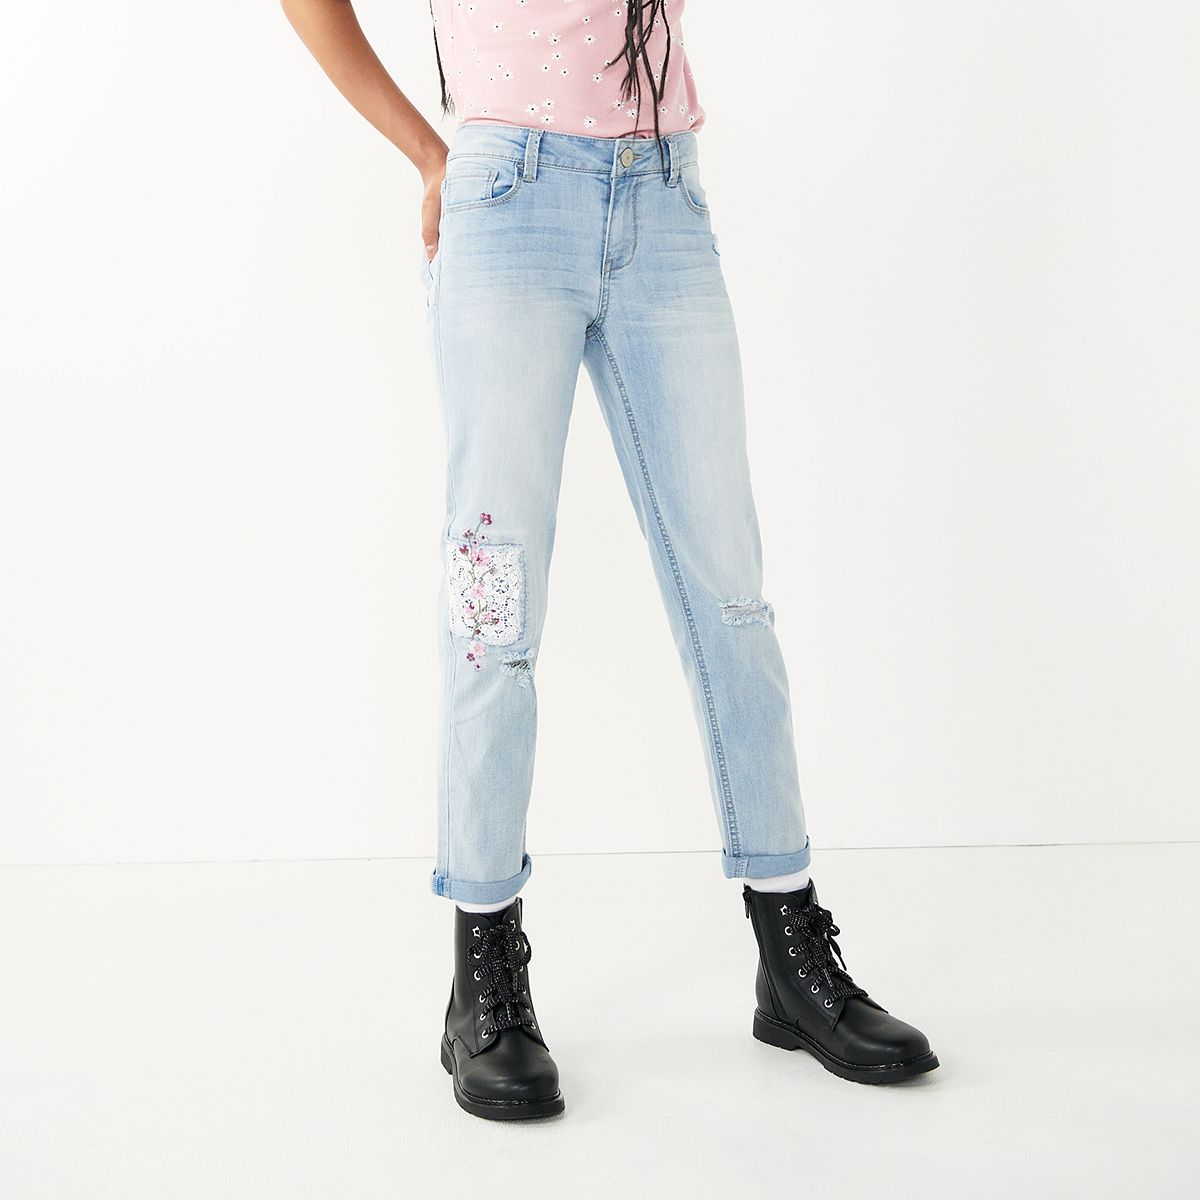 Girls’ SO Favorite Girlfriend Jeans on sale for $10.50